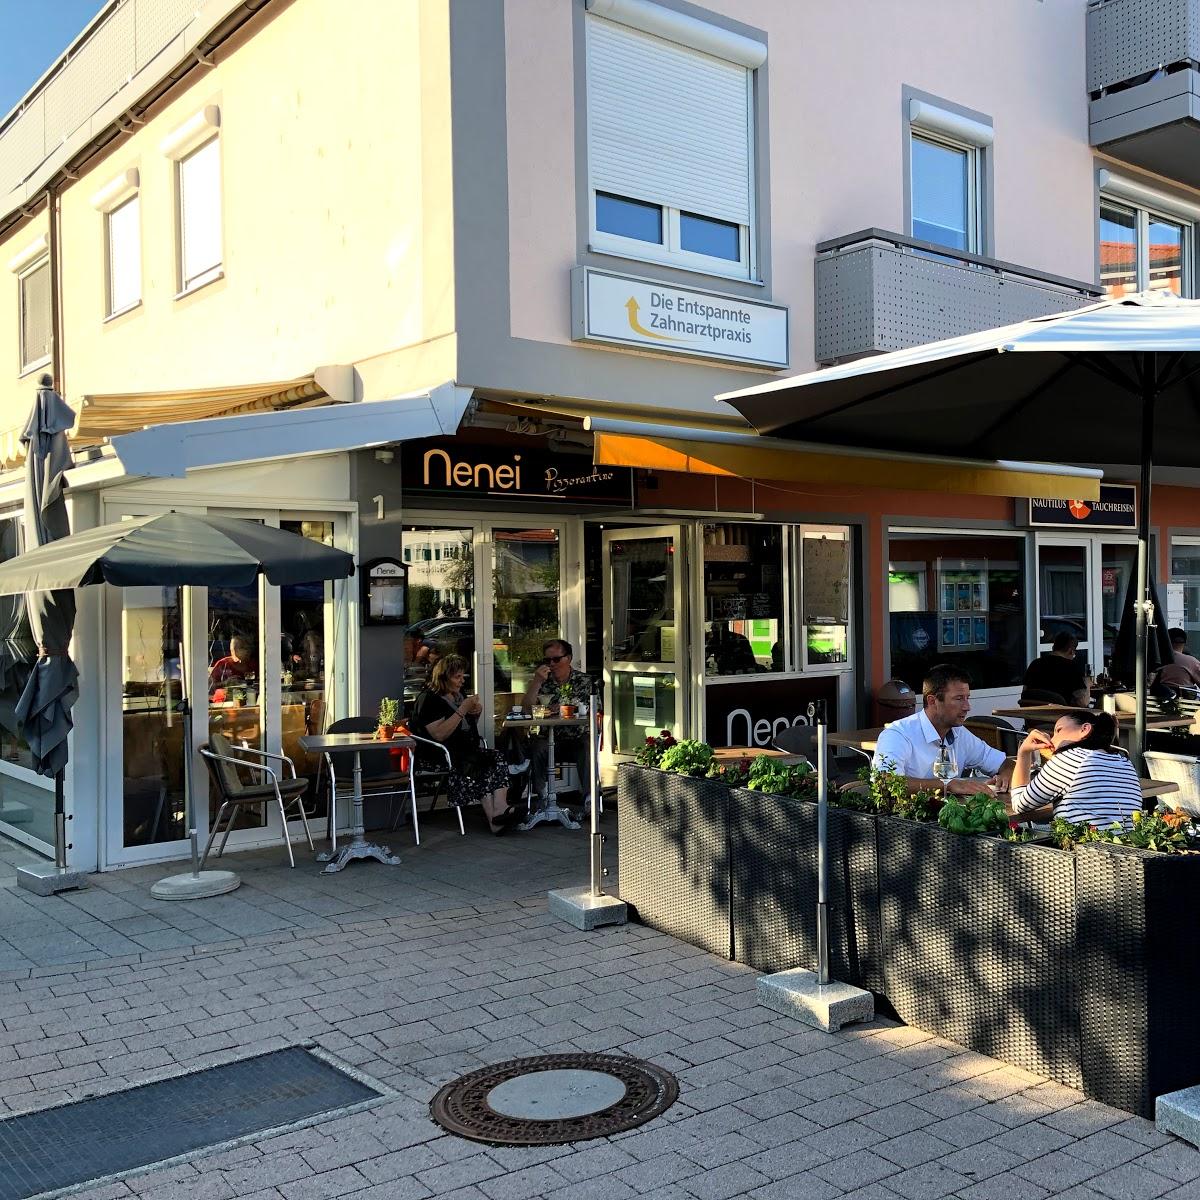 Restaurant "Nenei" in  Ammersee